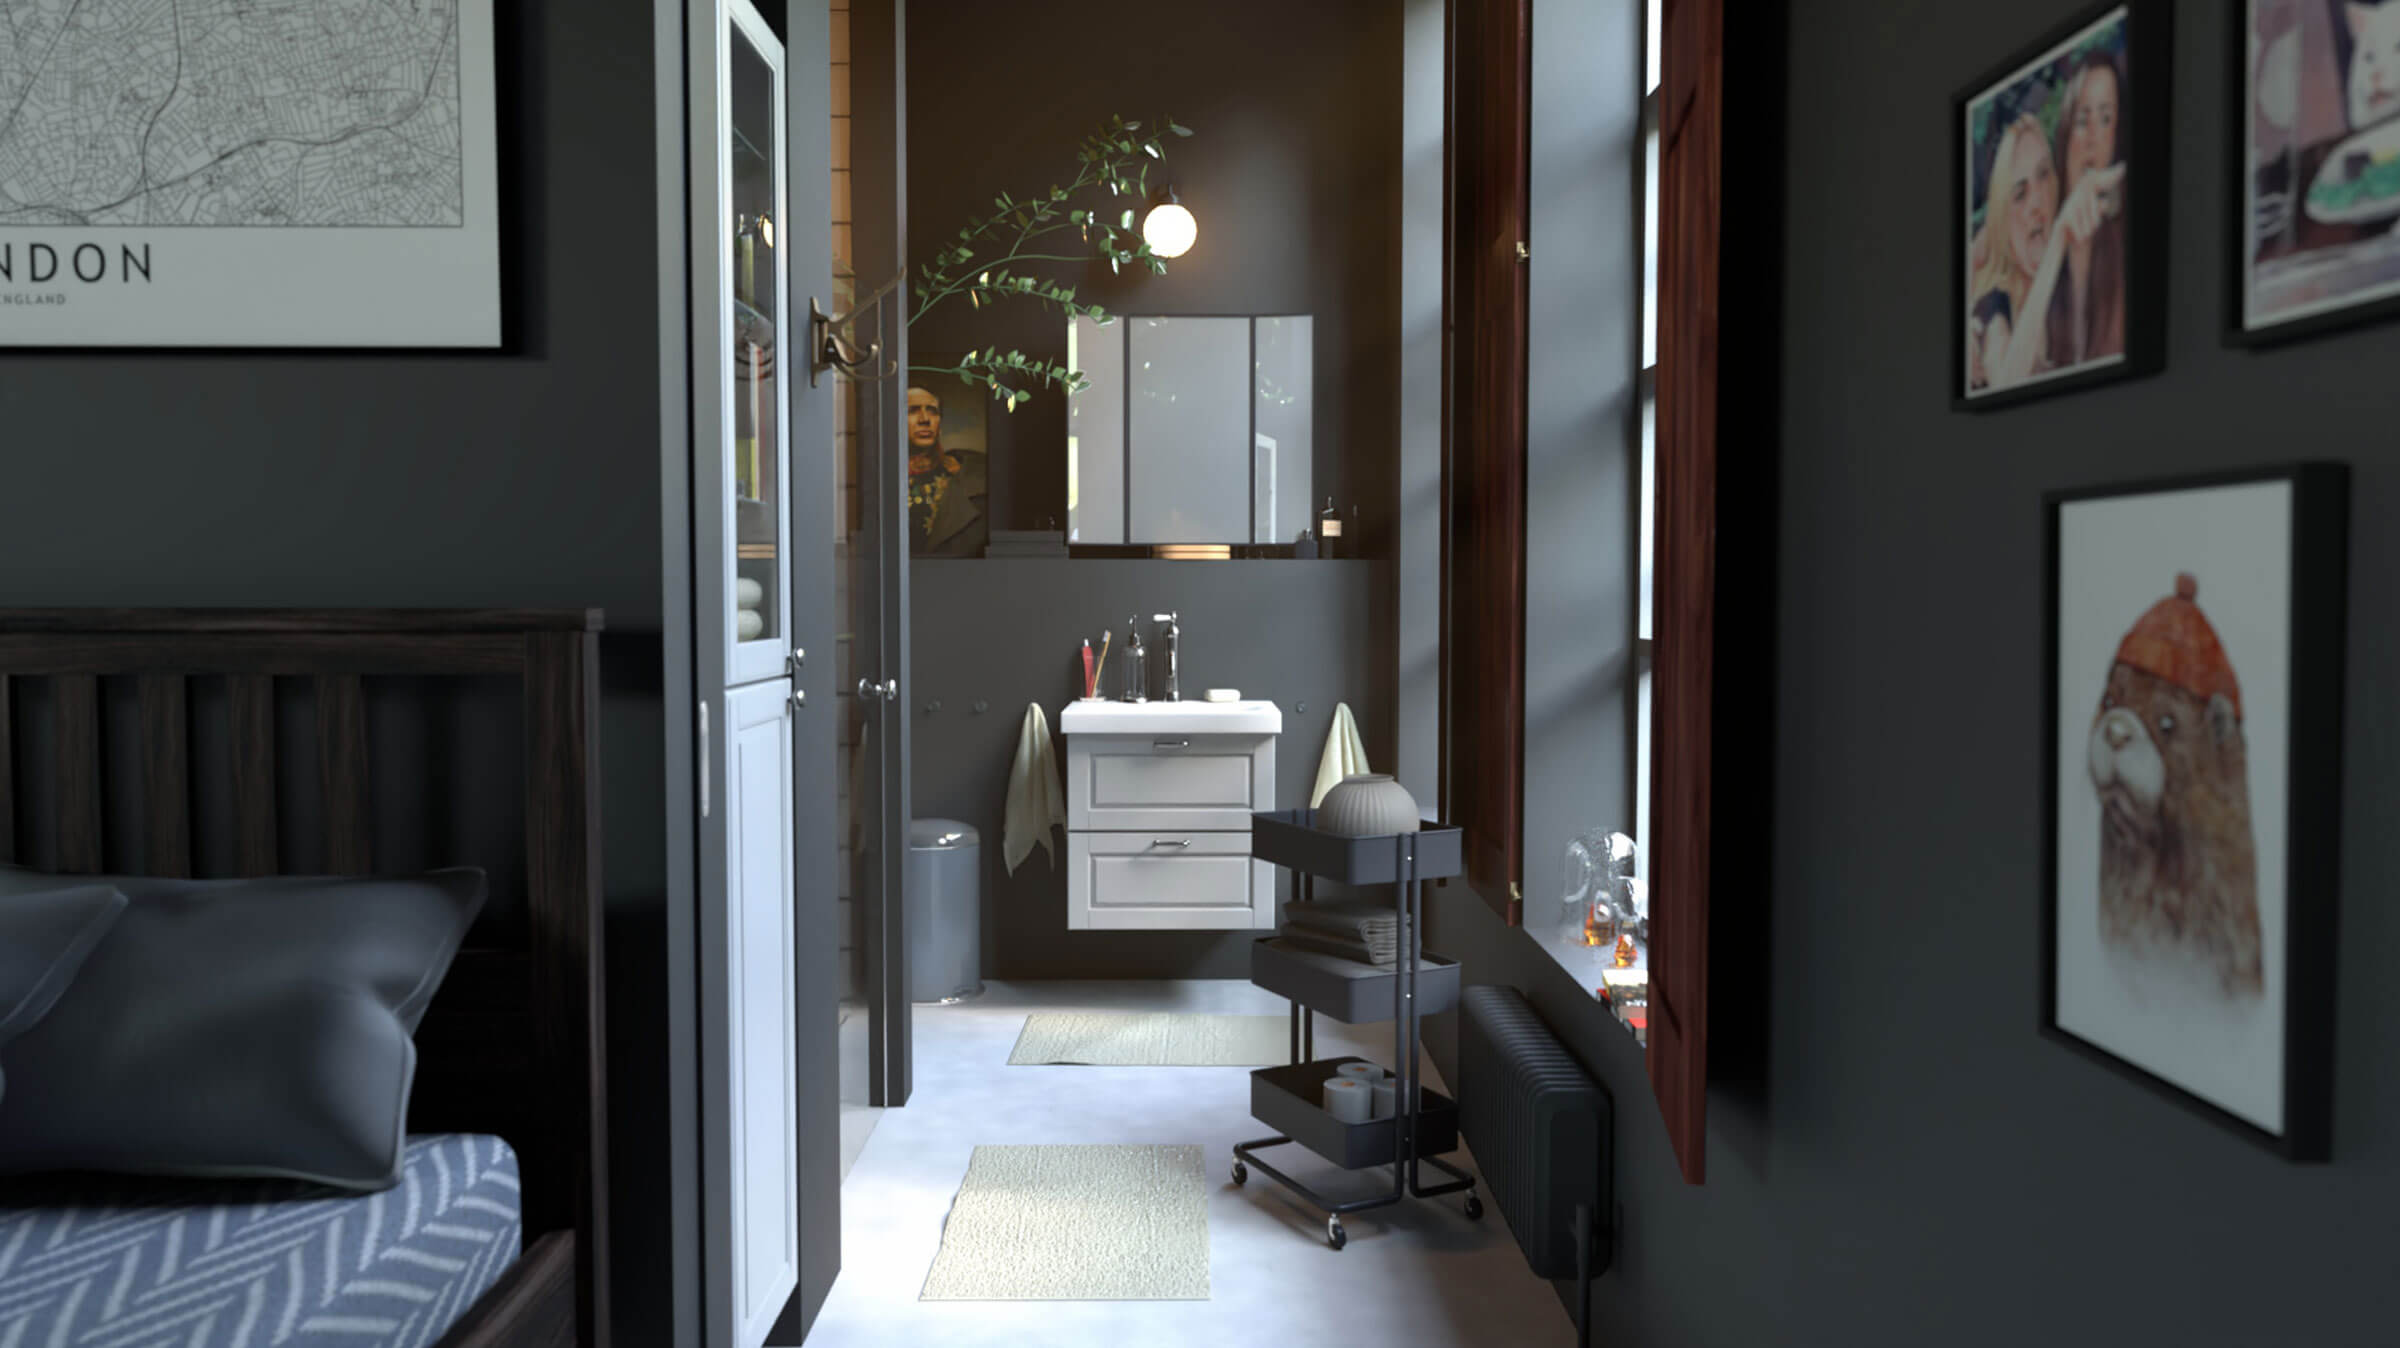 3D-modeled scene looking toward a bathroom sink as seen from a bedroom.